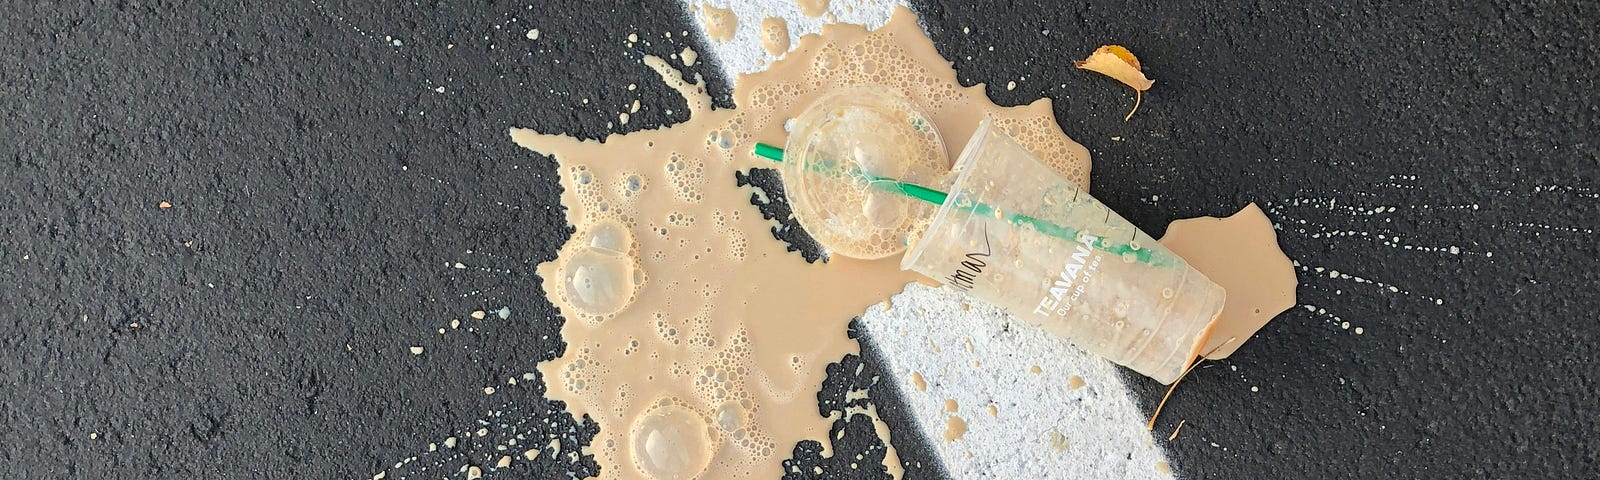 Iced coffee spilled on asphalt